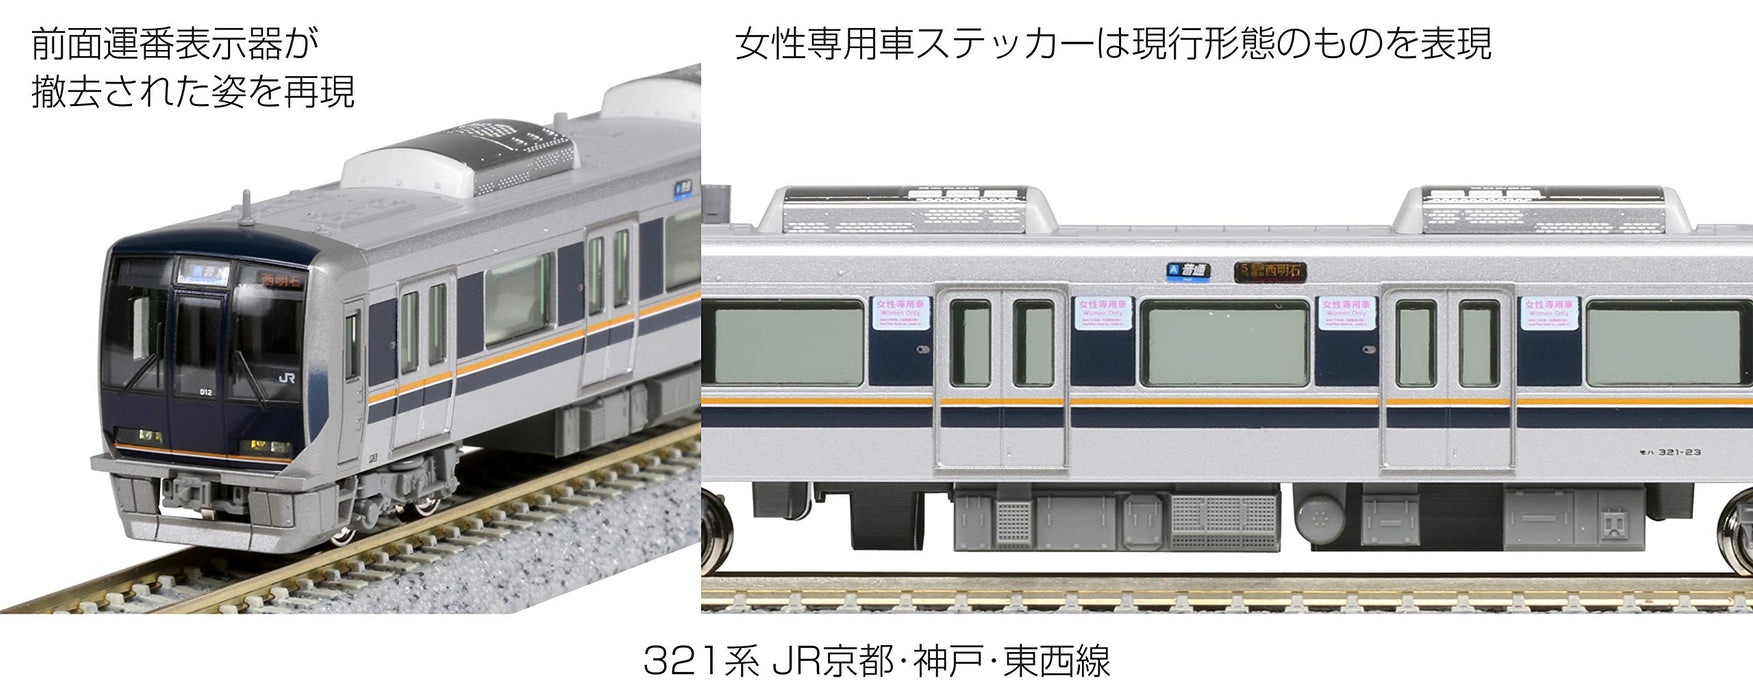 Kato N Gauge 321 Kyoto/Kobe/Tozai 3 Coffret de voitures 10-1574 Train miniature